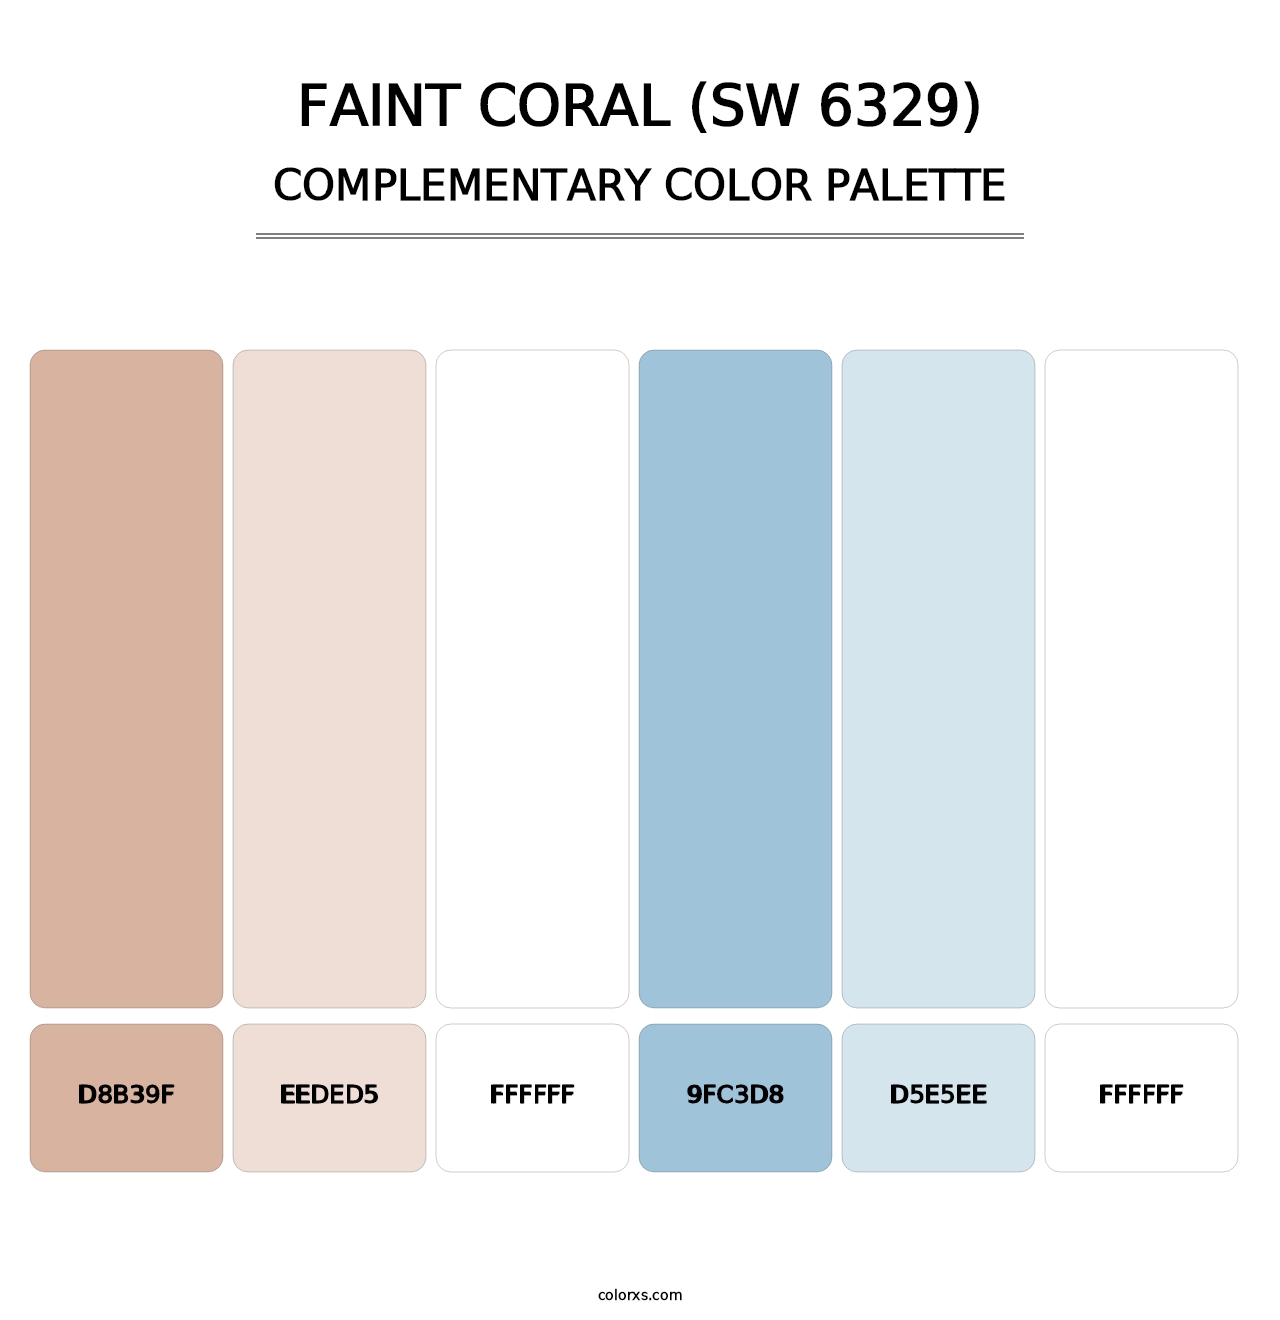 Faint Coral (SW 6329) - Complementary Color Palette